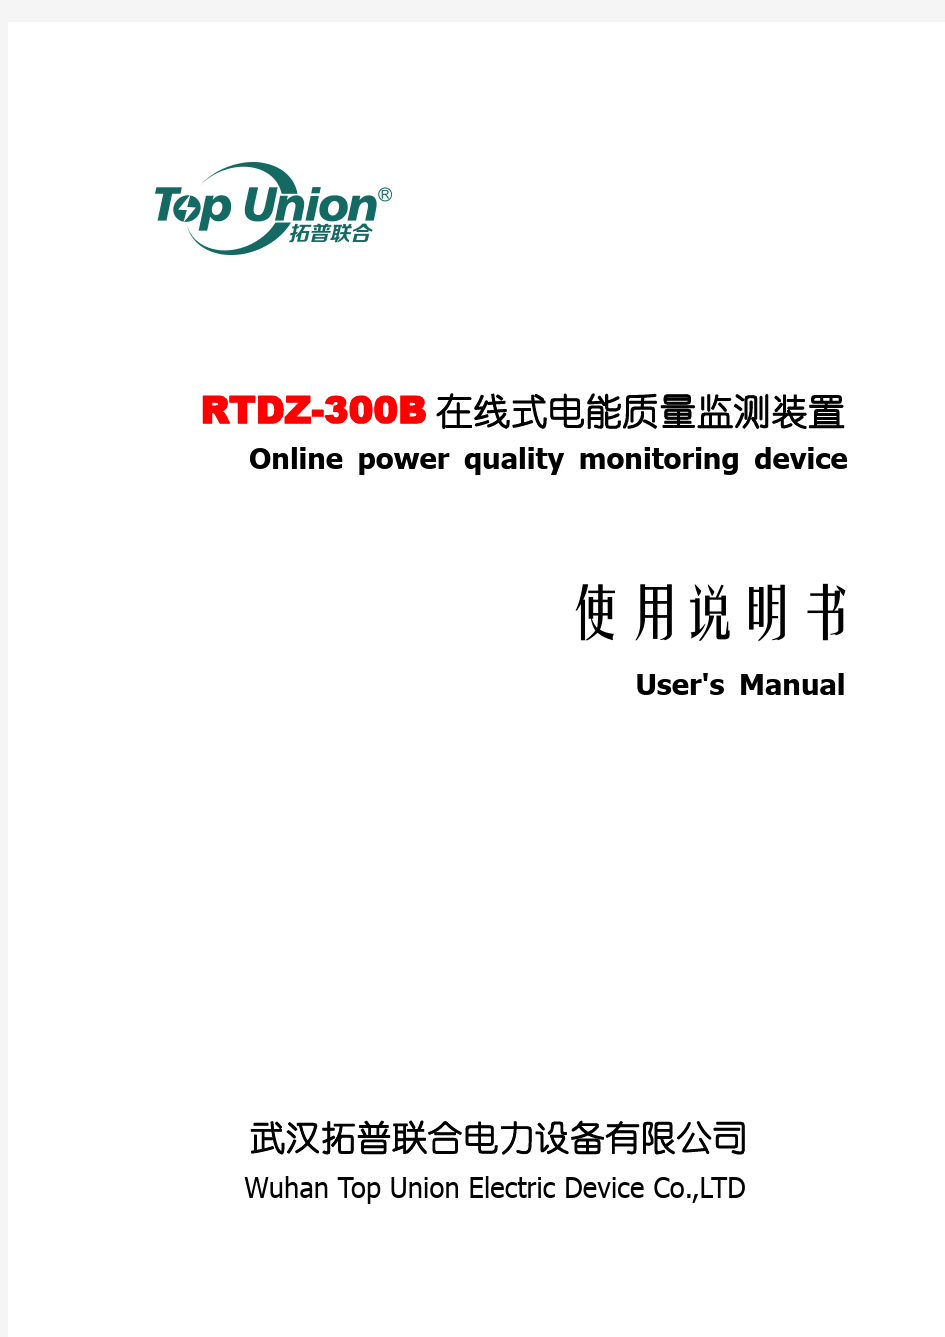 RTDZ-300B在线式电能质量监测装置说明书